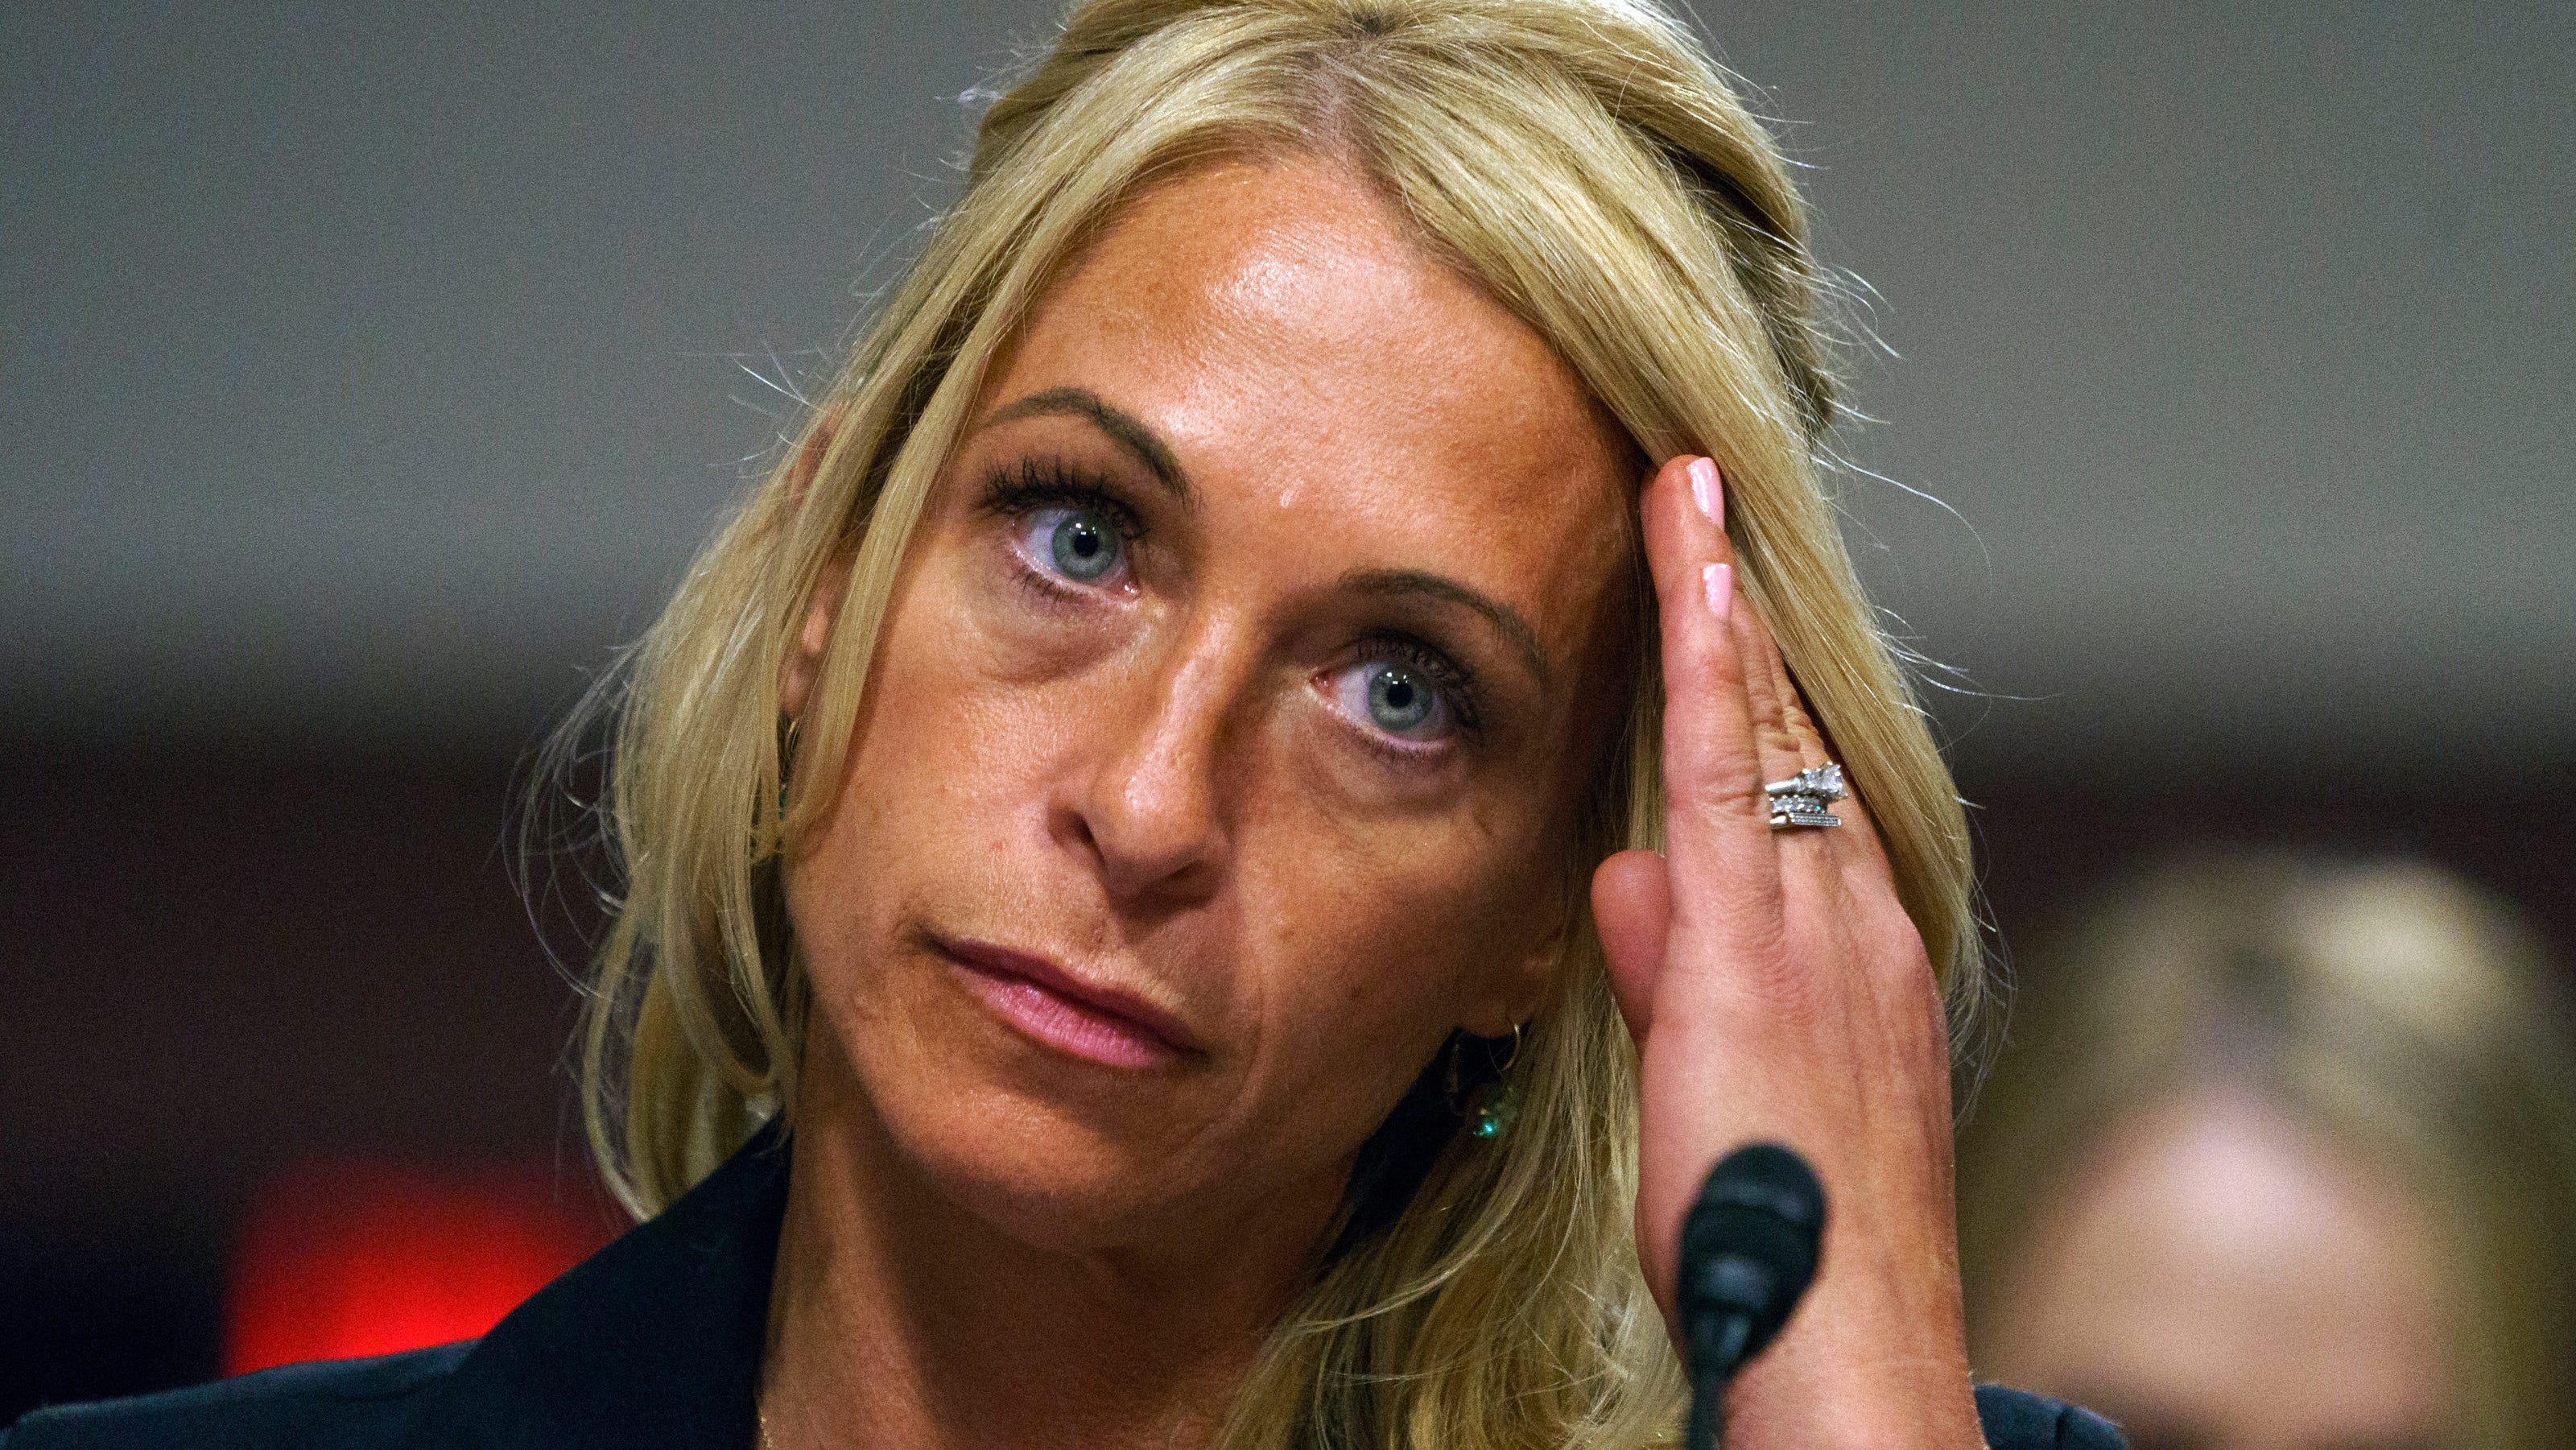 U-M fires Rhonda Faehn, coach with ties to Nassar scandal